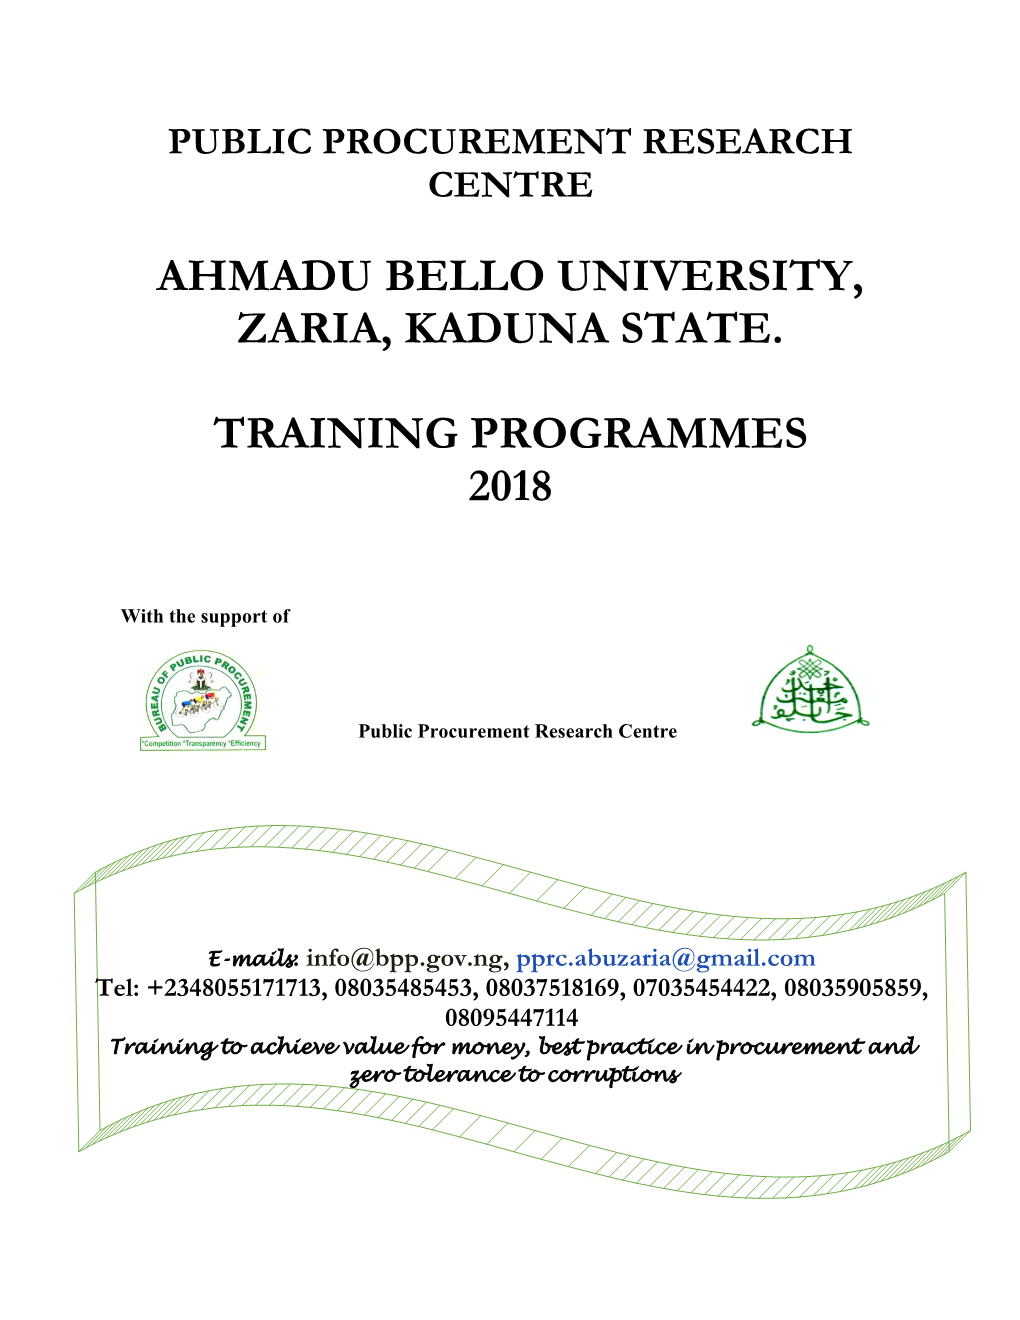 Ahmadu Bello University, Zaria, Kaduna State. Training Programmes